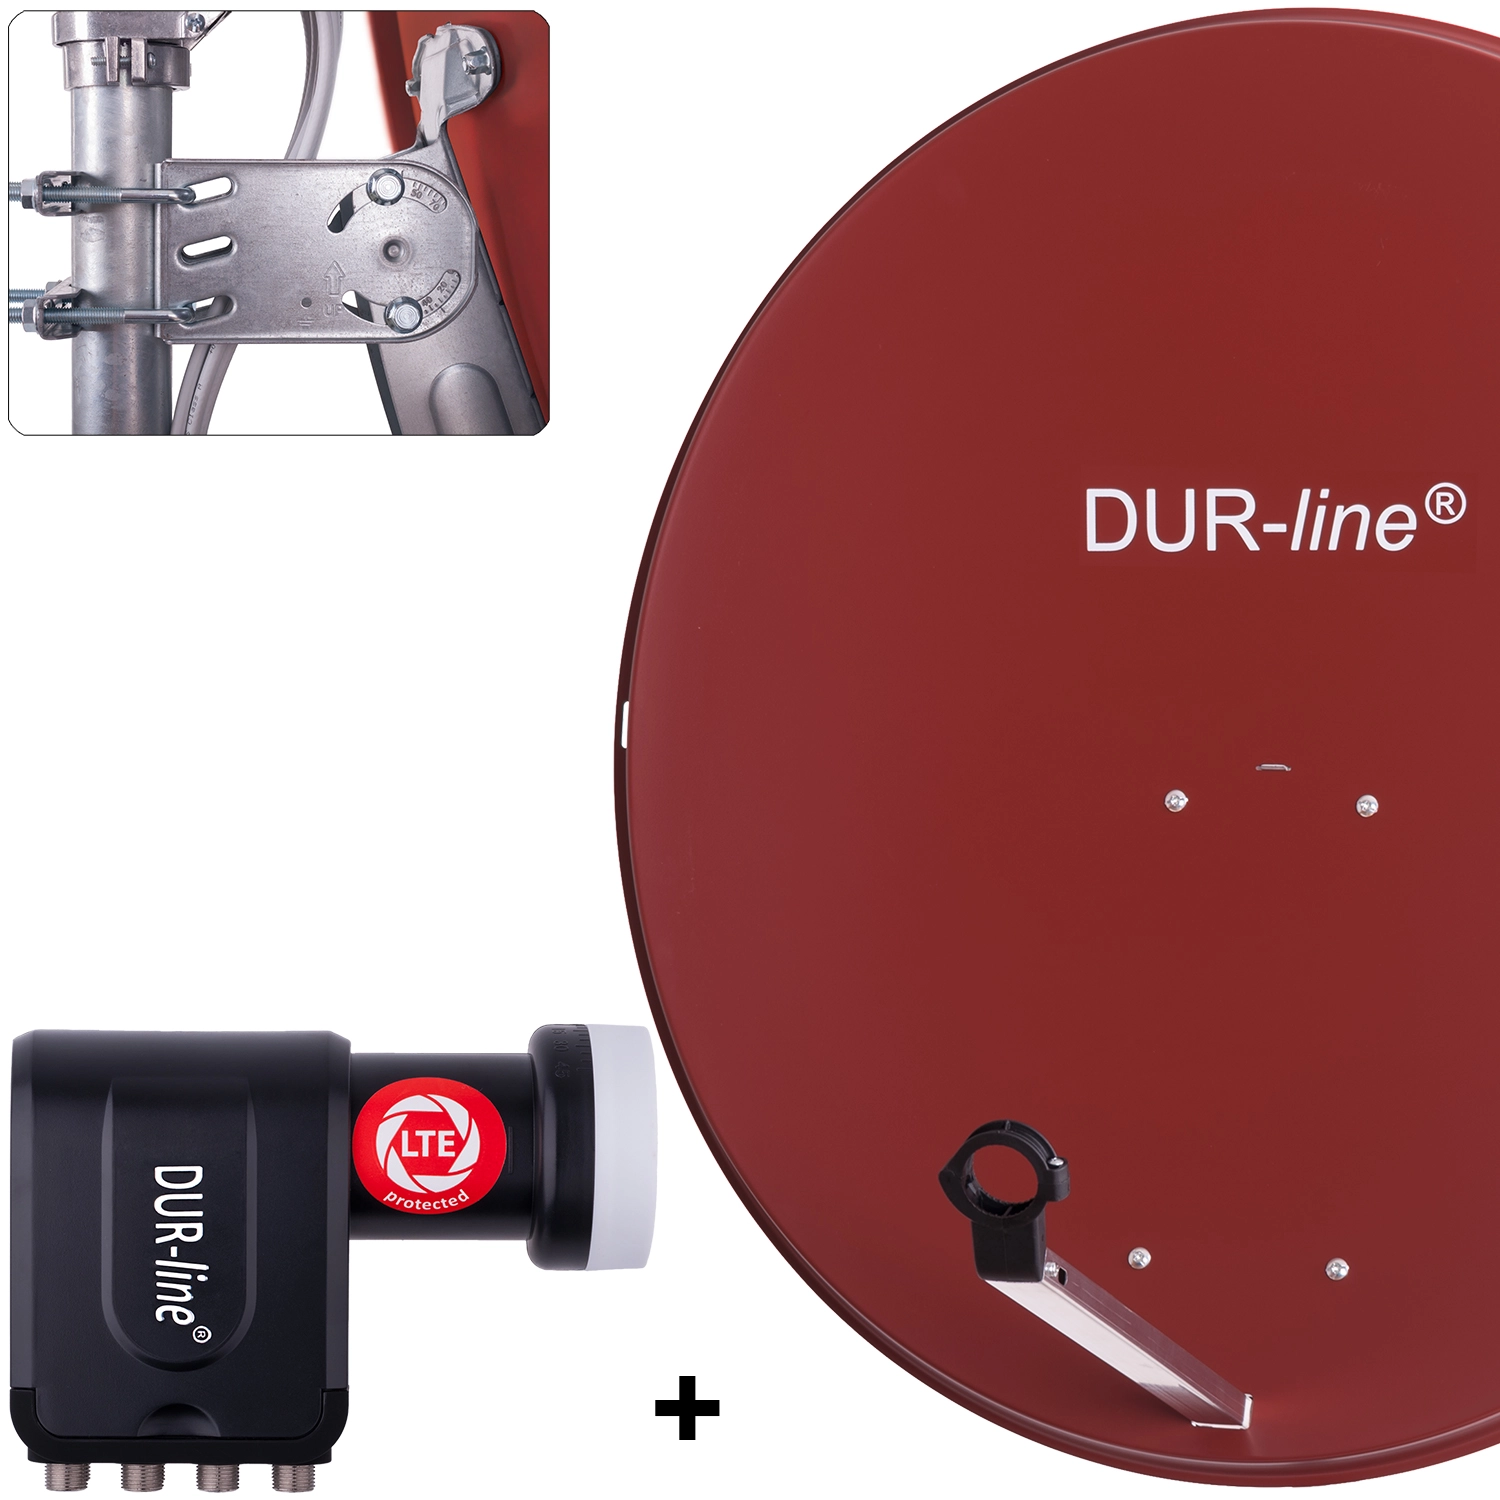 DUR-line MDA 90 R + +Ultra Octo LNB - 8 TN LNB Set